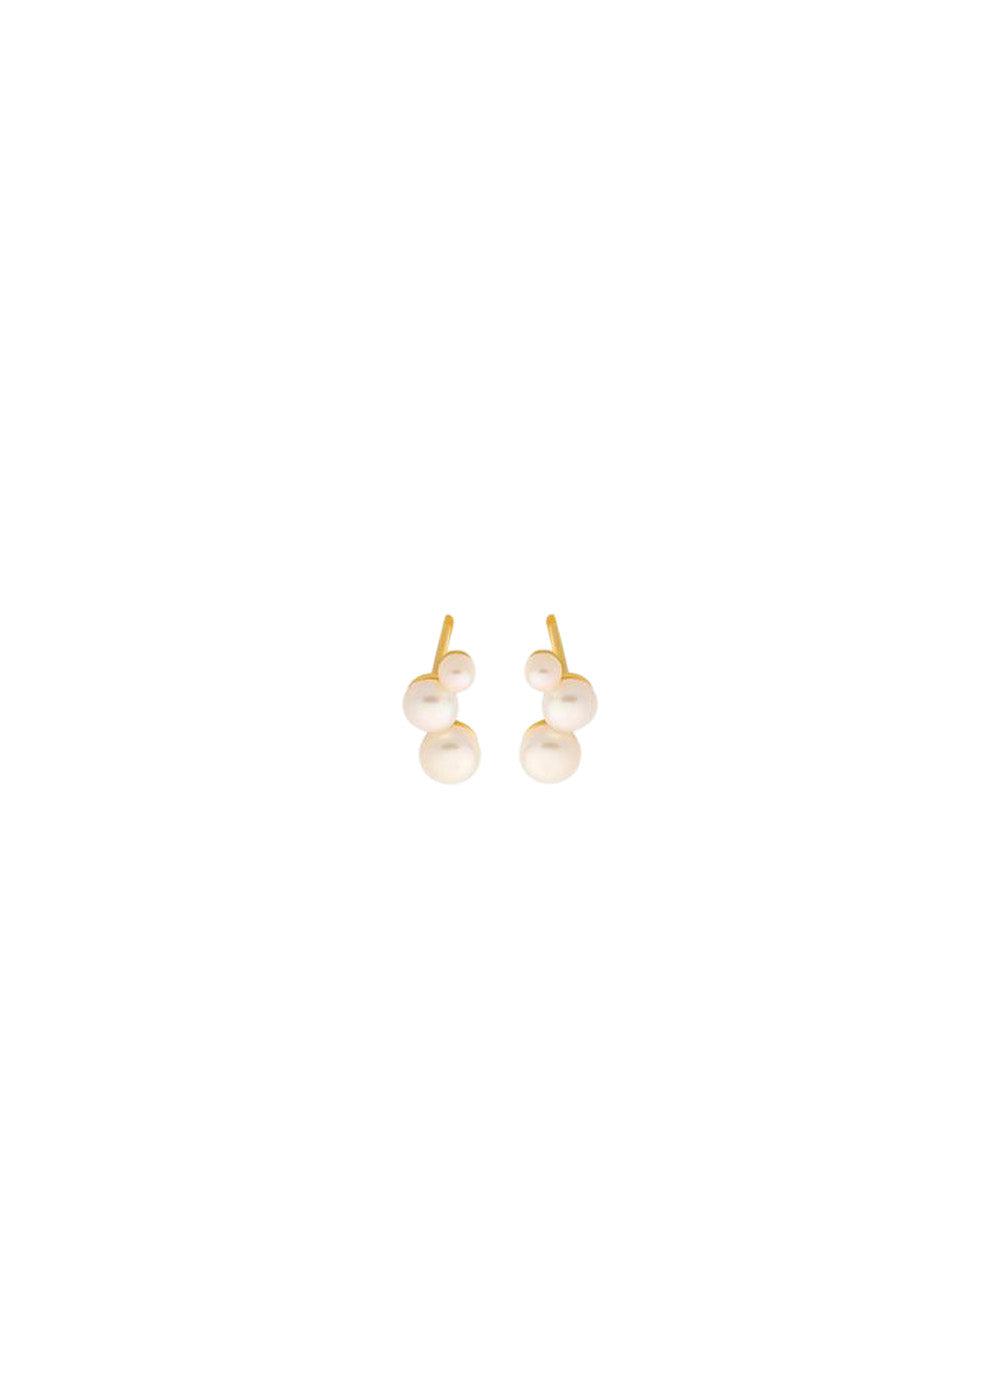 Pernille Corydons Treasure Earsticks size 11 mm - Gold. Køb øreringe her.